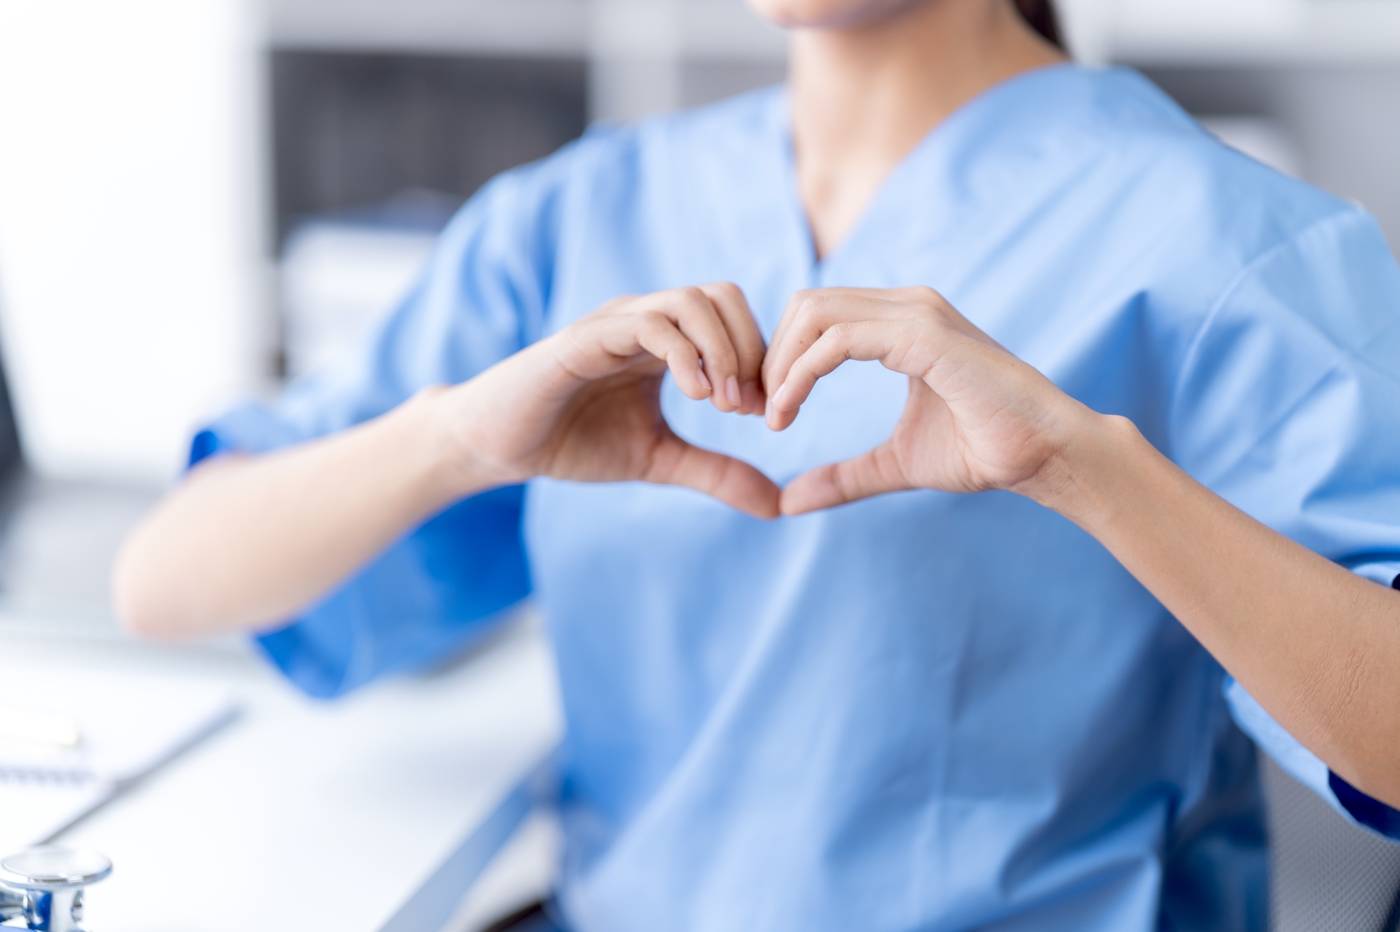 Female nurse using hands to gesture a heart shape